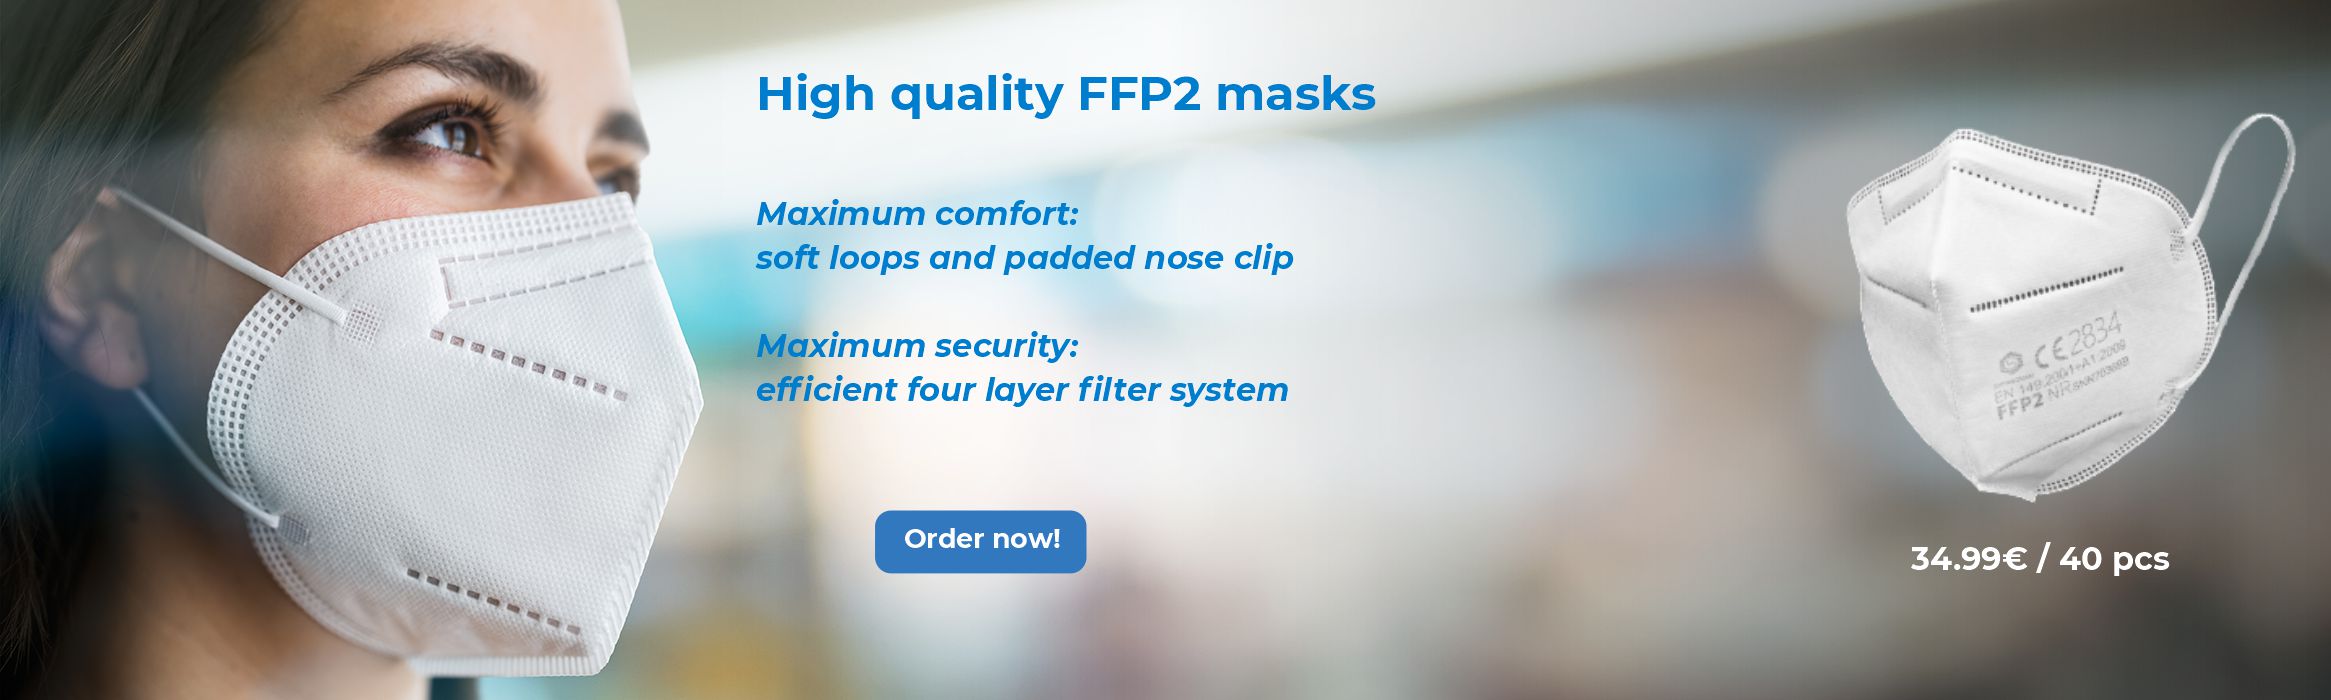 Slider - FFP2 mask